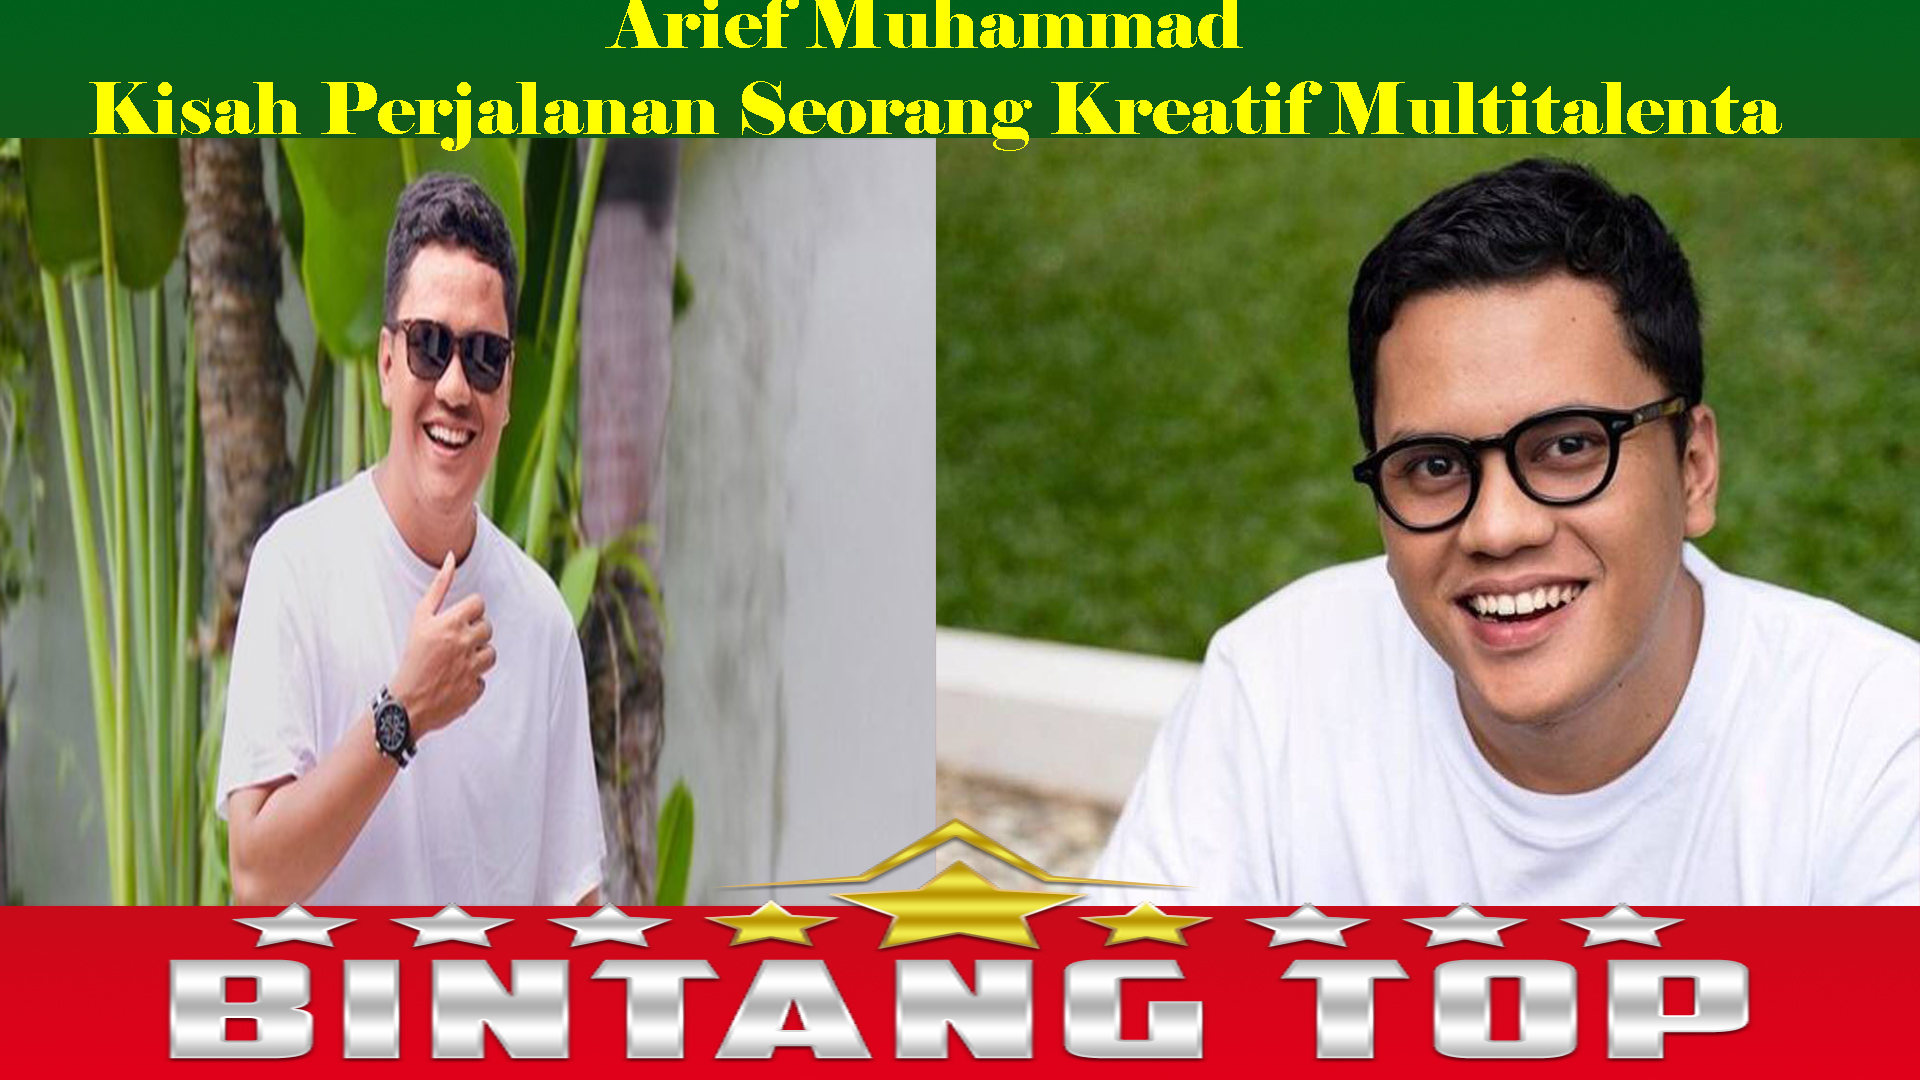 Arief Muhammad Kisah Perjalanan Seorang Kreatif Multitalenta